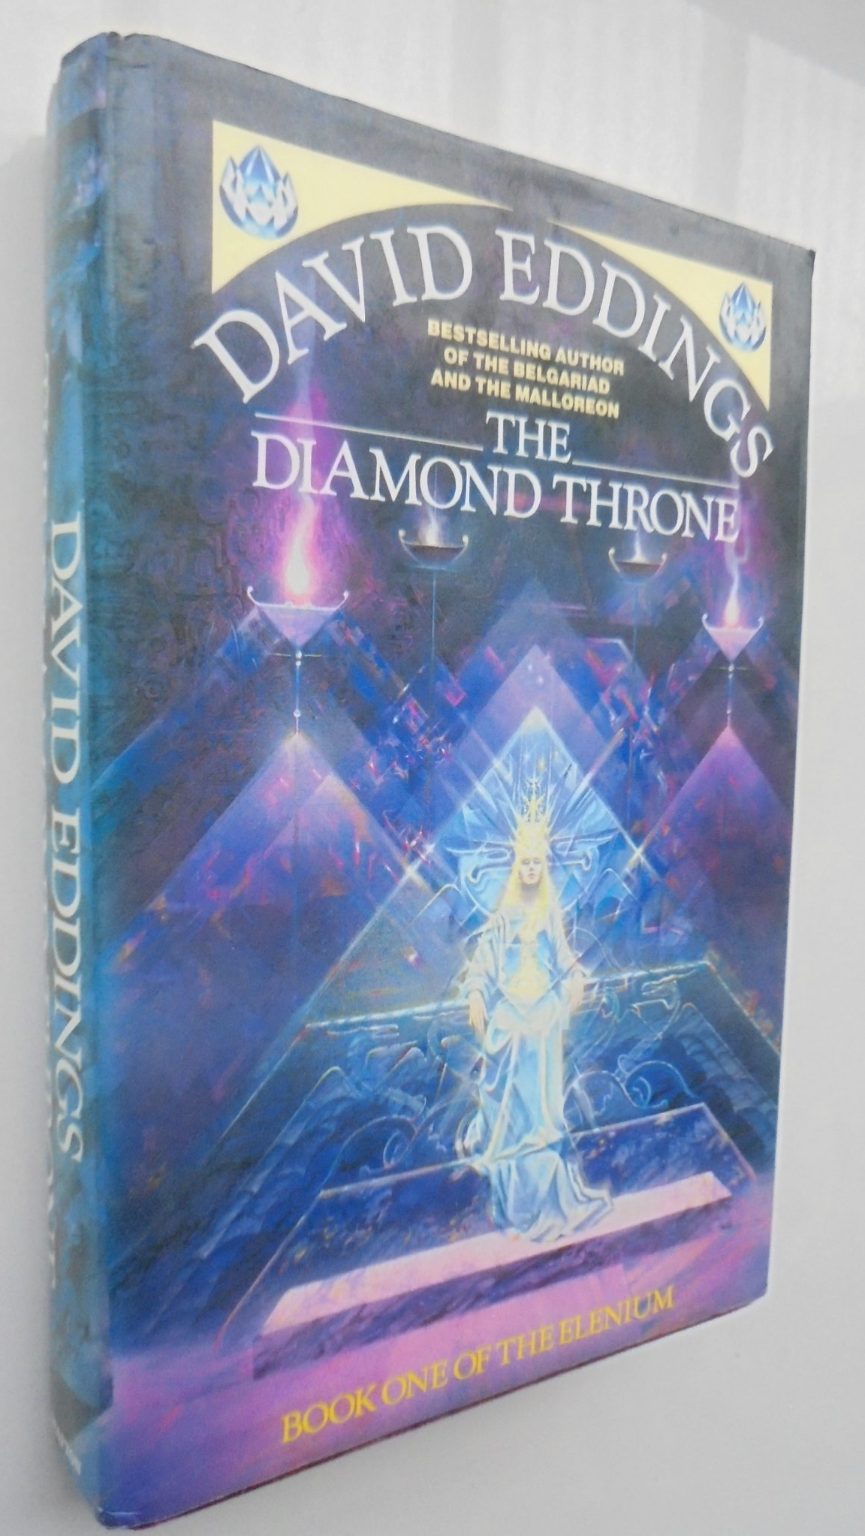 The Diamond Throne. (The Elenium book1). First UK Edition. By David Eddings